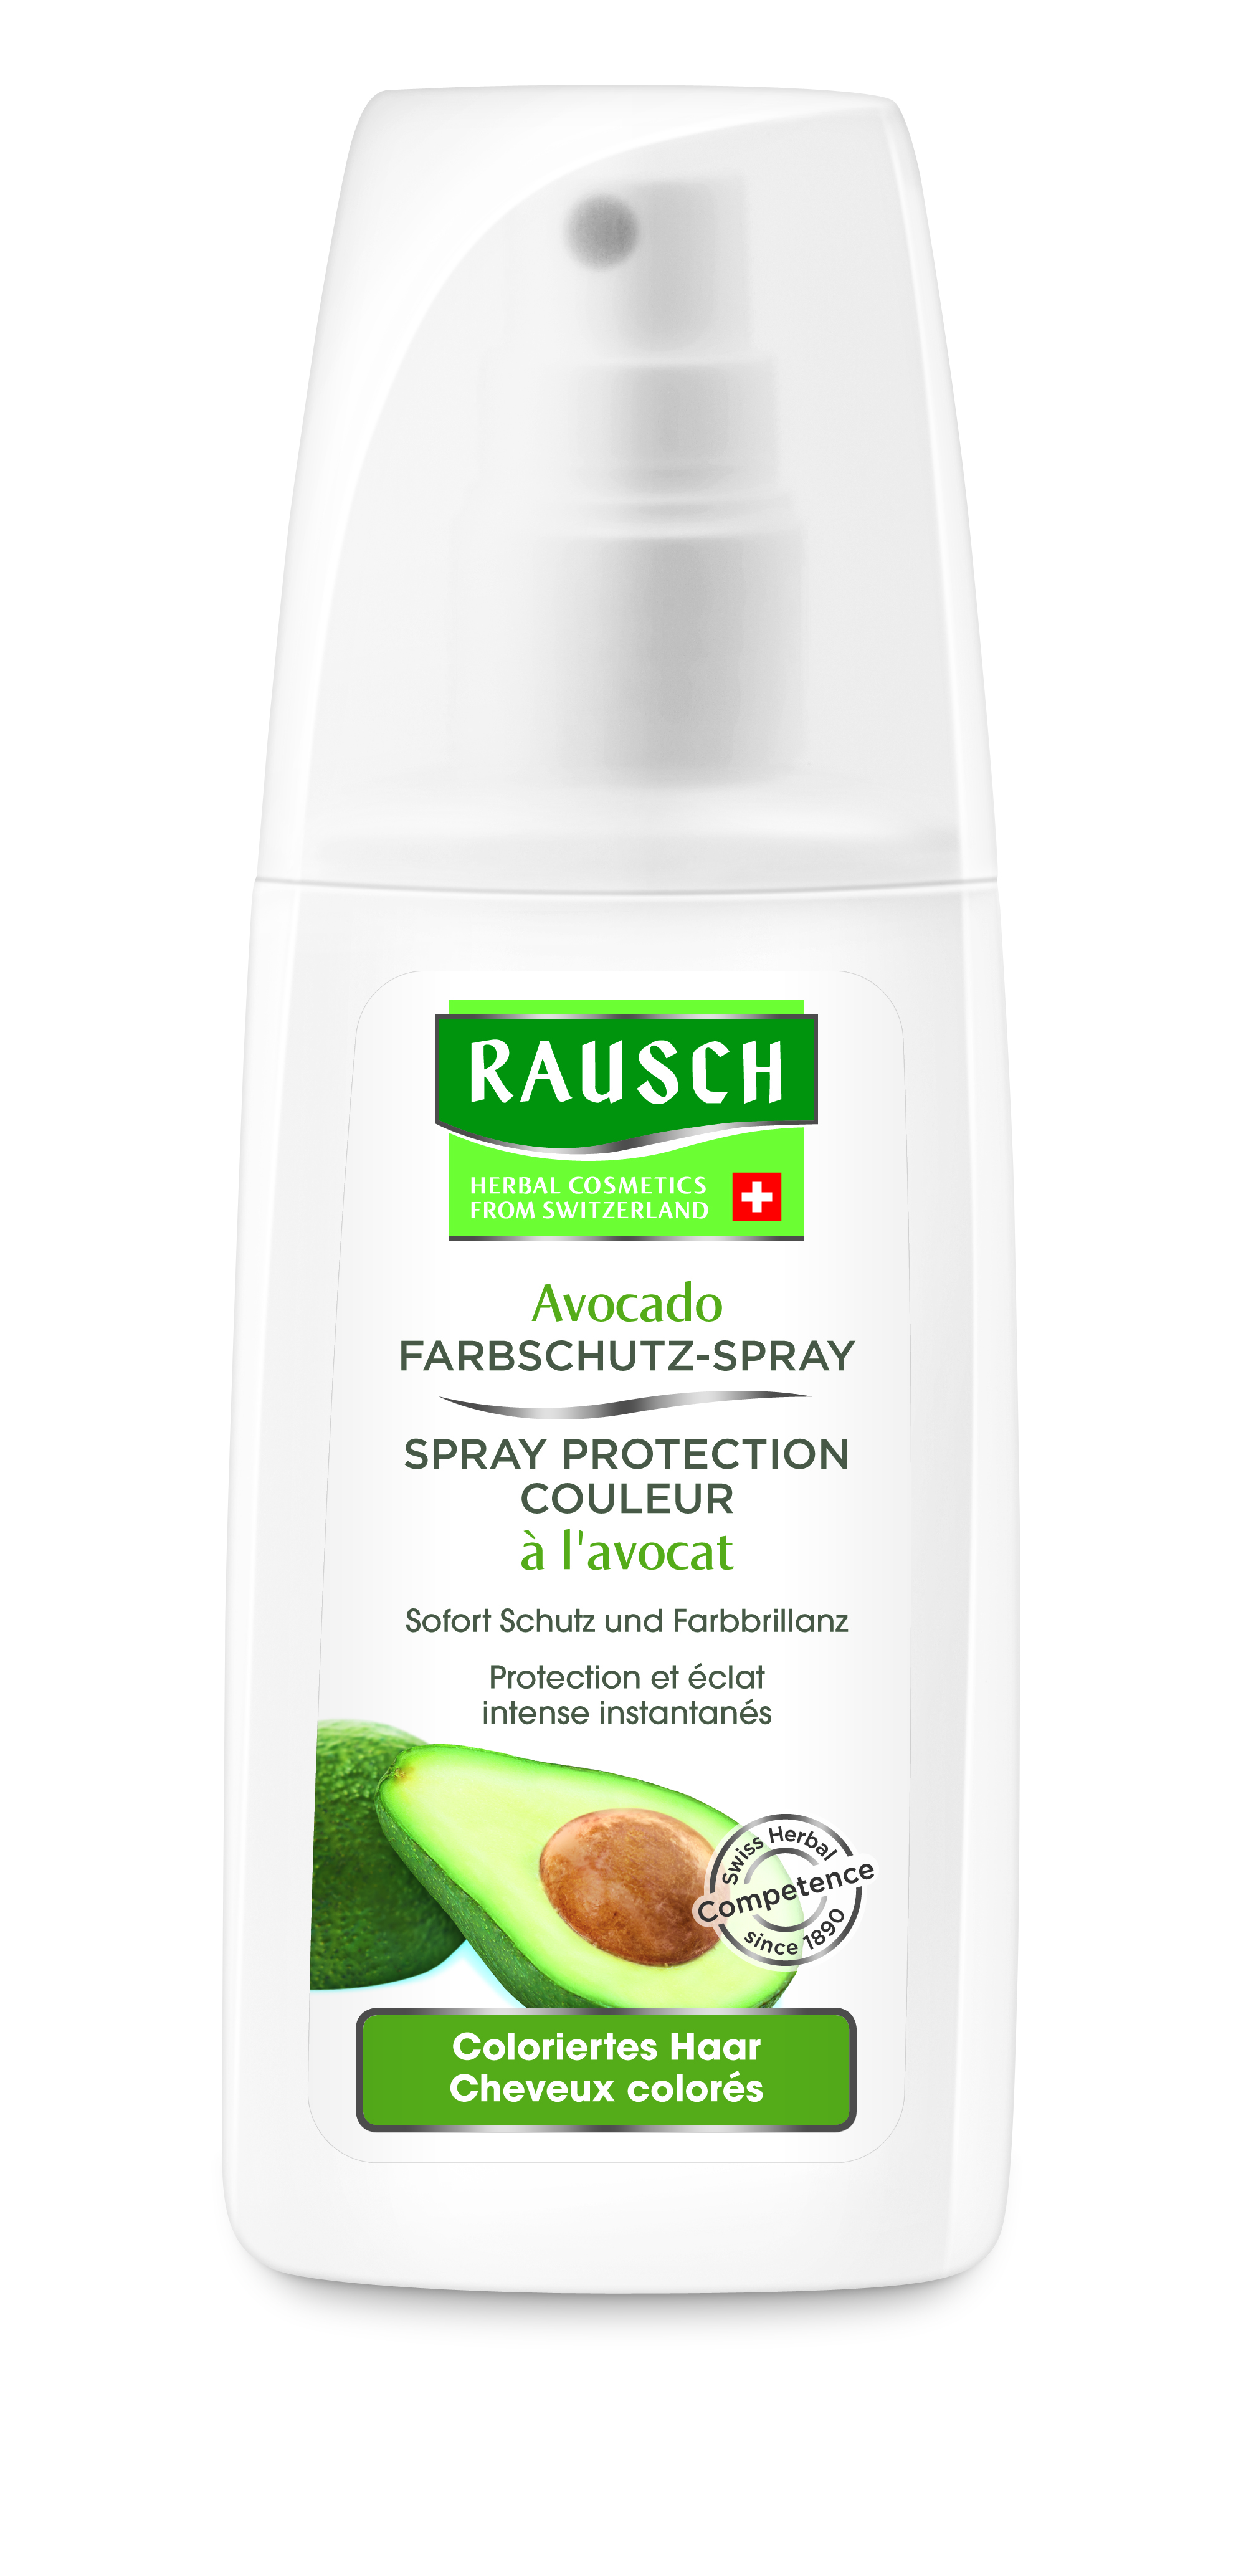 Rausch Avocado Farbschutz-Spray